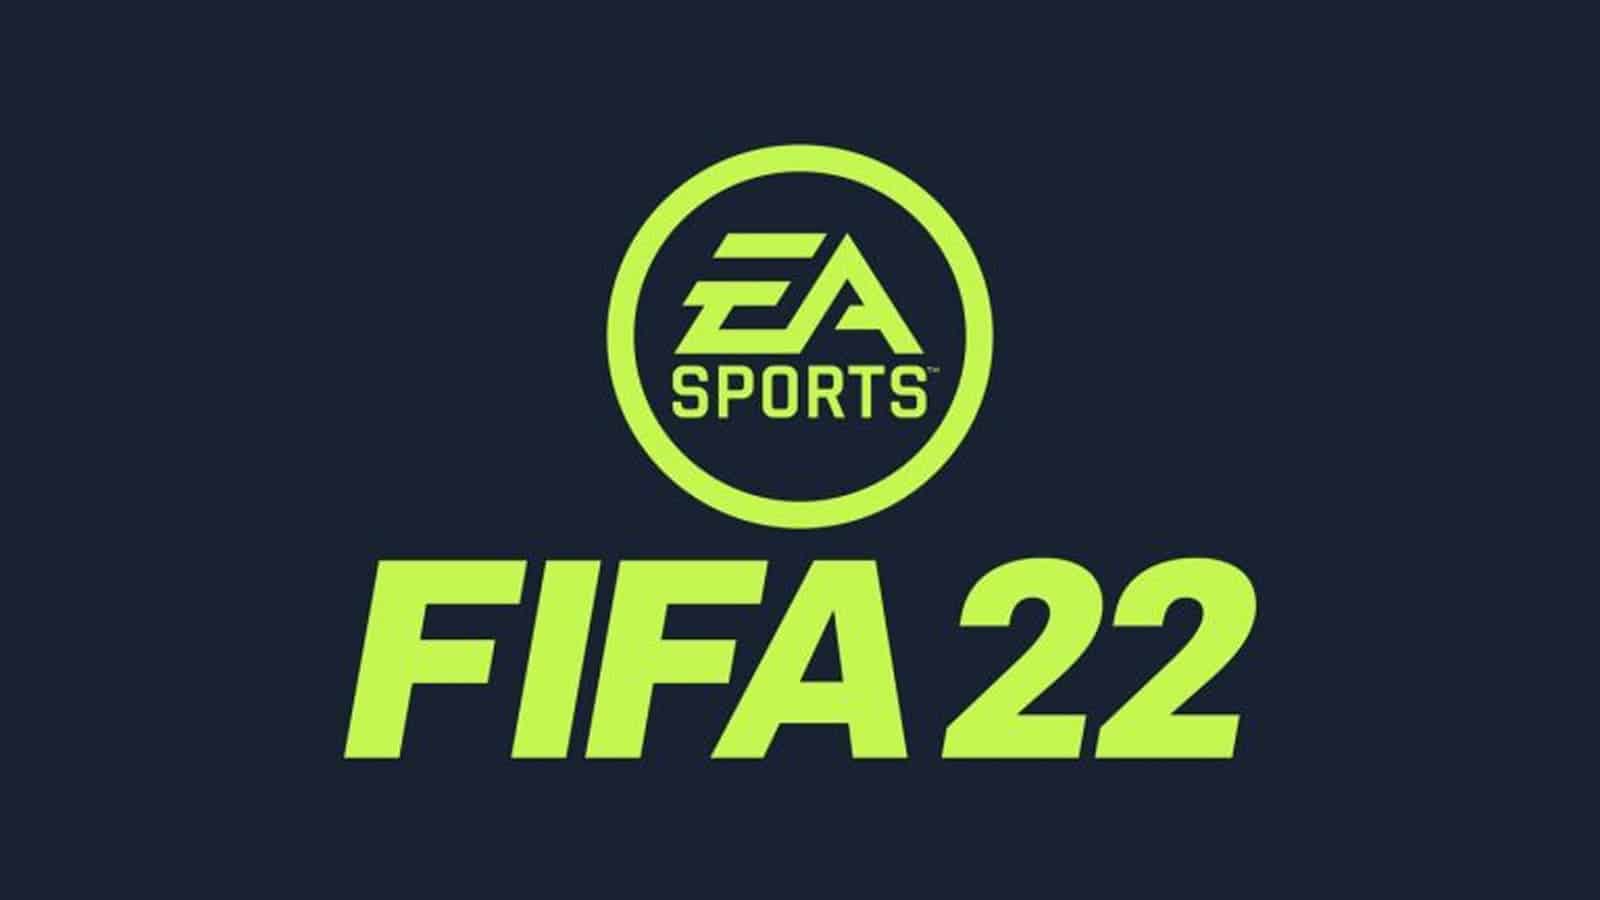 FIFA 22 sortie imminente en fin Septembre début Octobre